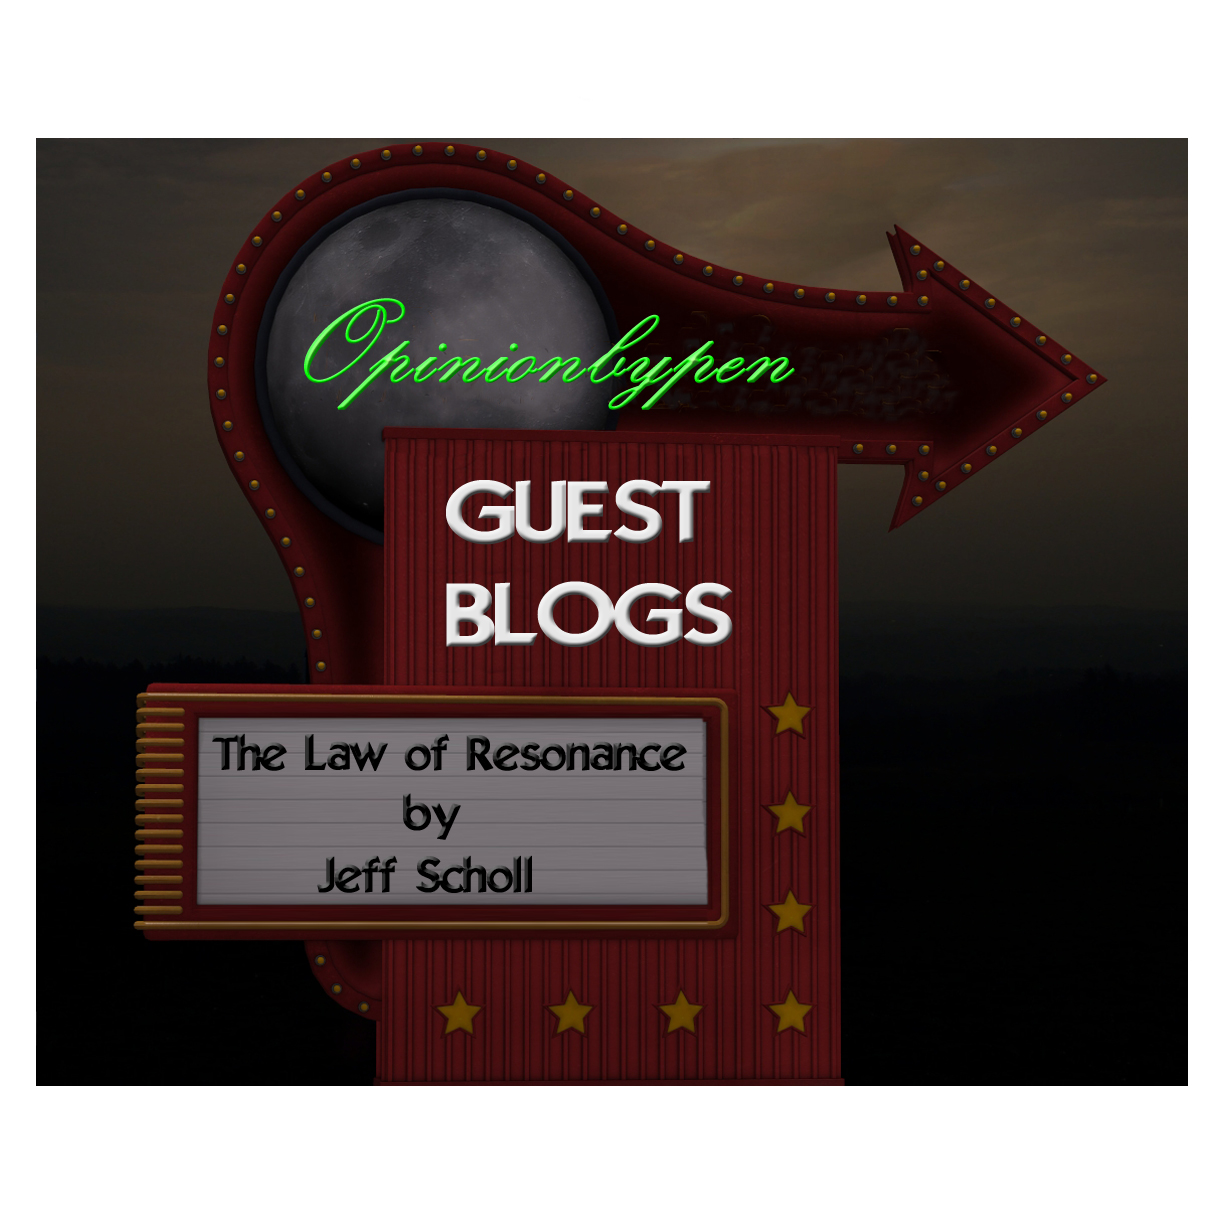 The Law of Resonance